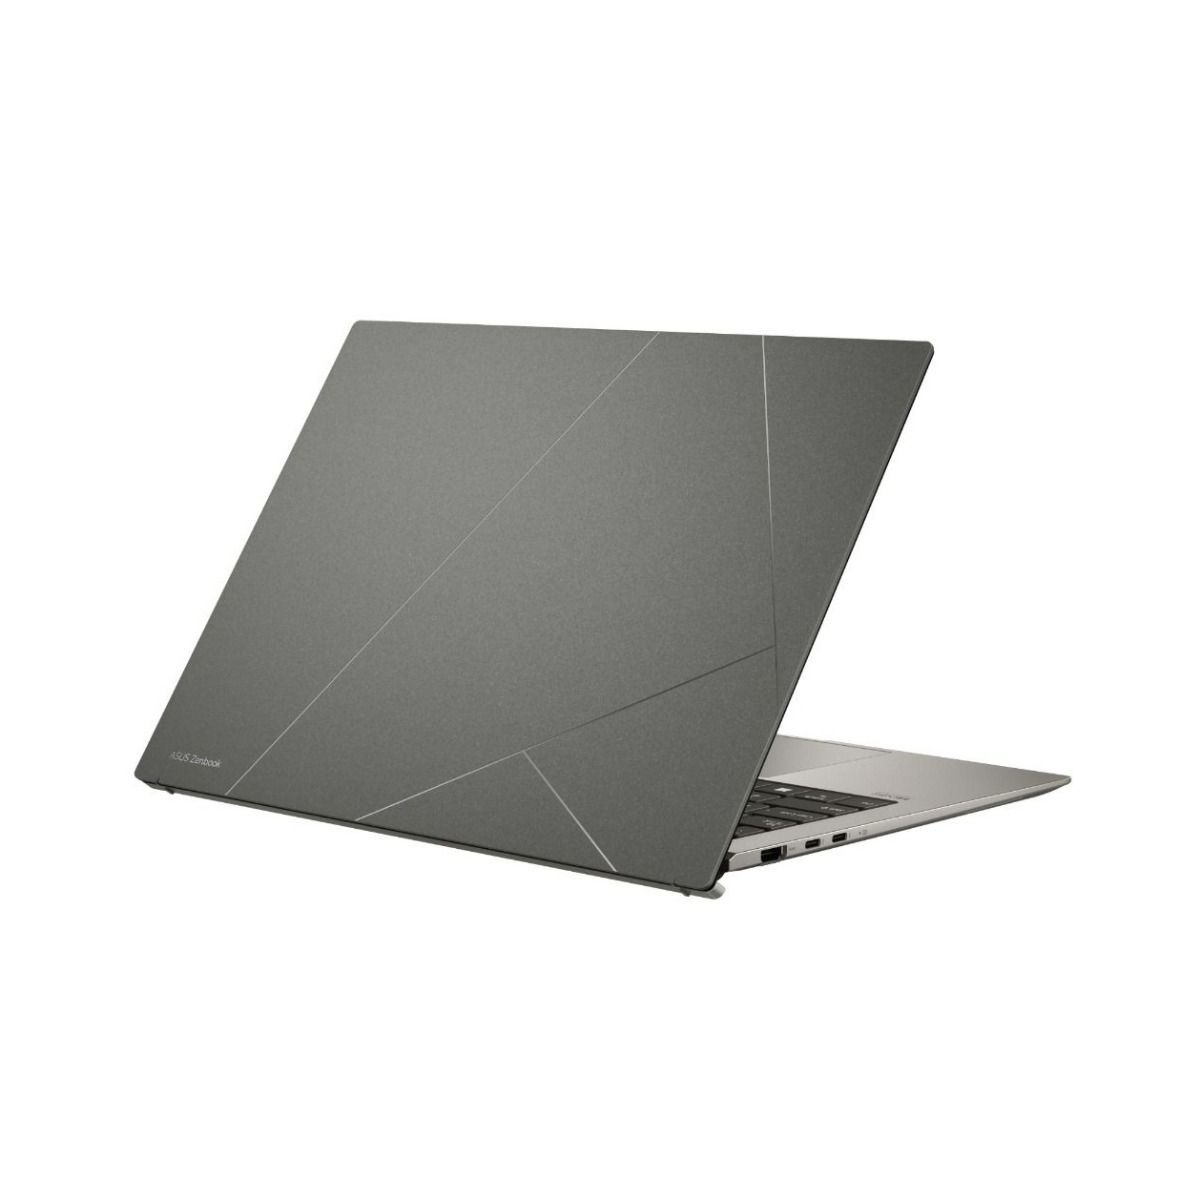 ASUS Zenbook S 13.3" OLED Laptop Intel Core i7 13th Gen 16GB RAM 1TB SSD Grey